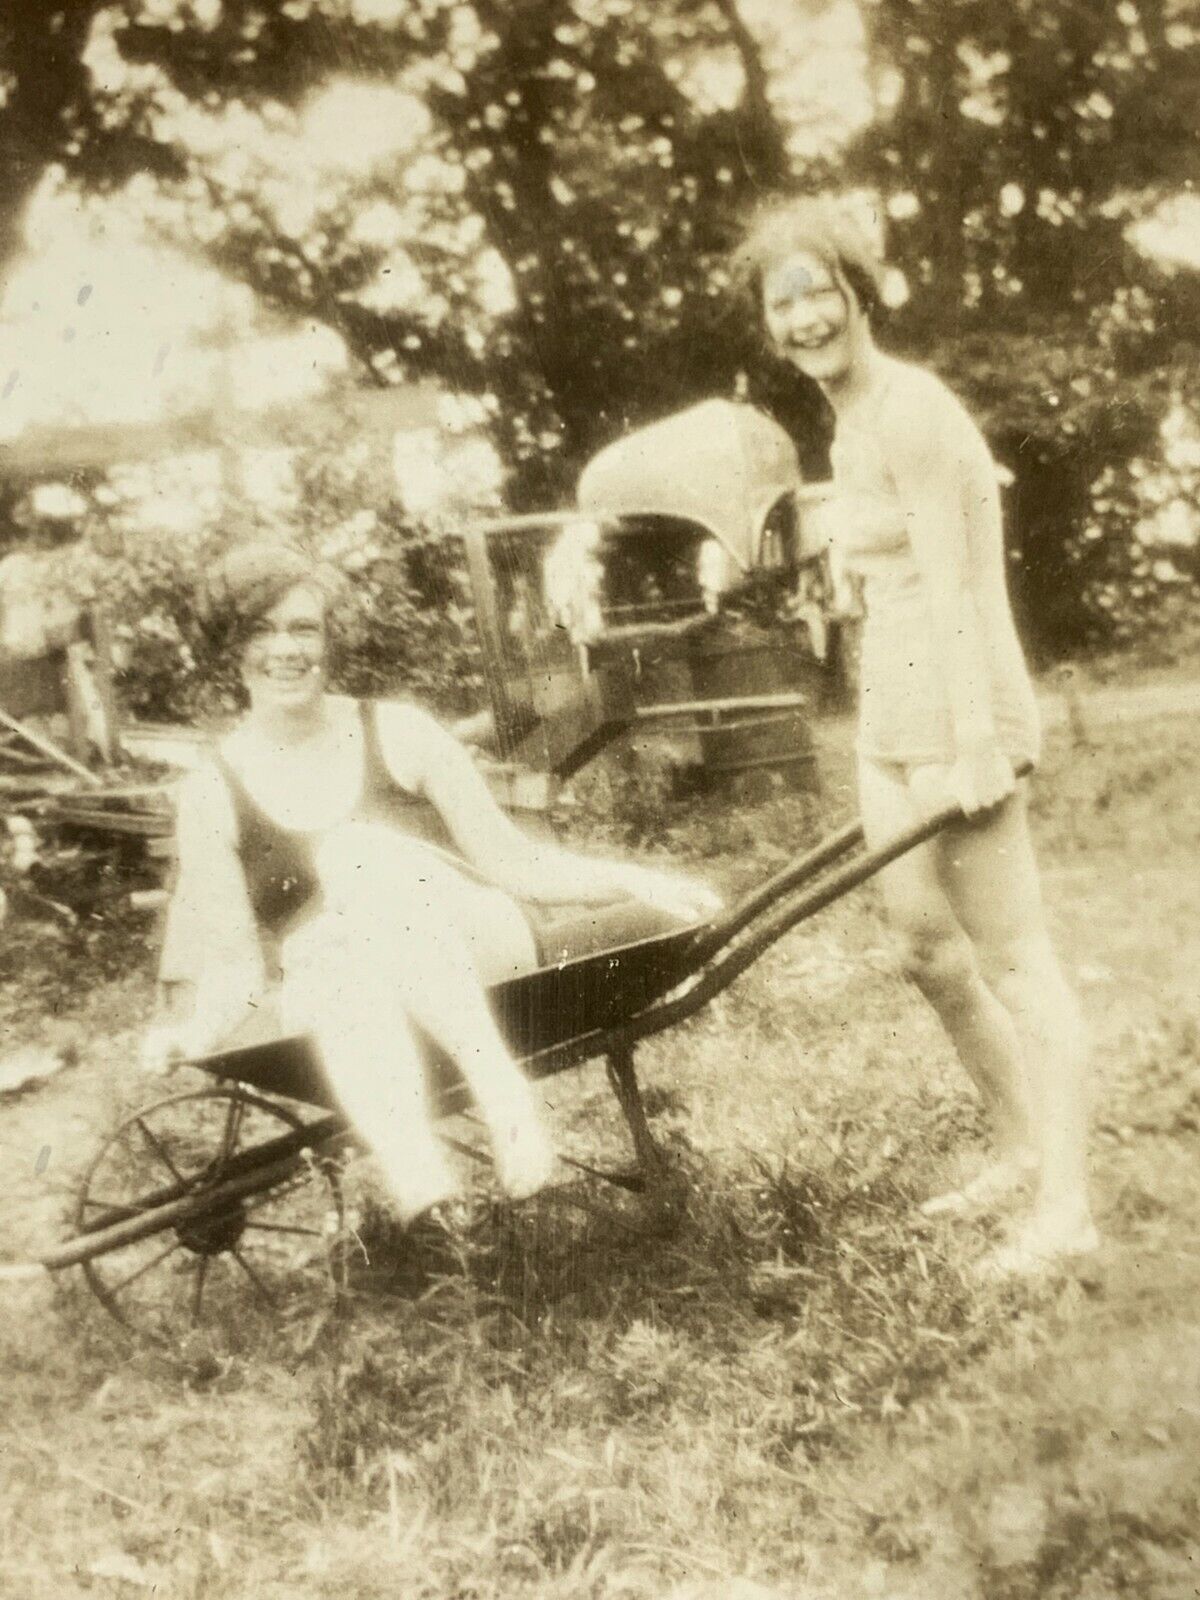 (AmJ) FOUND Photo Photograph Vintage Glowing Girls Wheelbarrow Exposure Odd